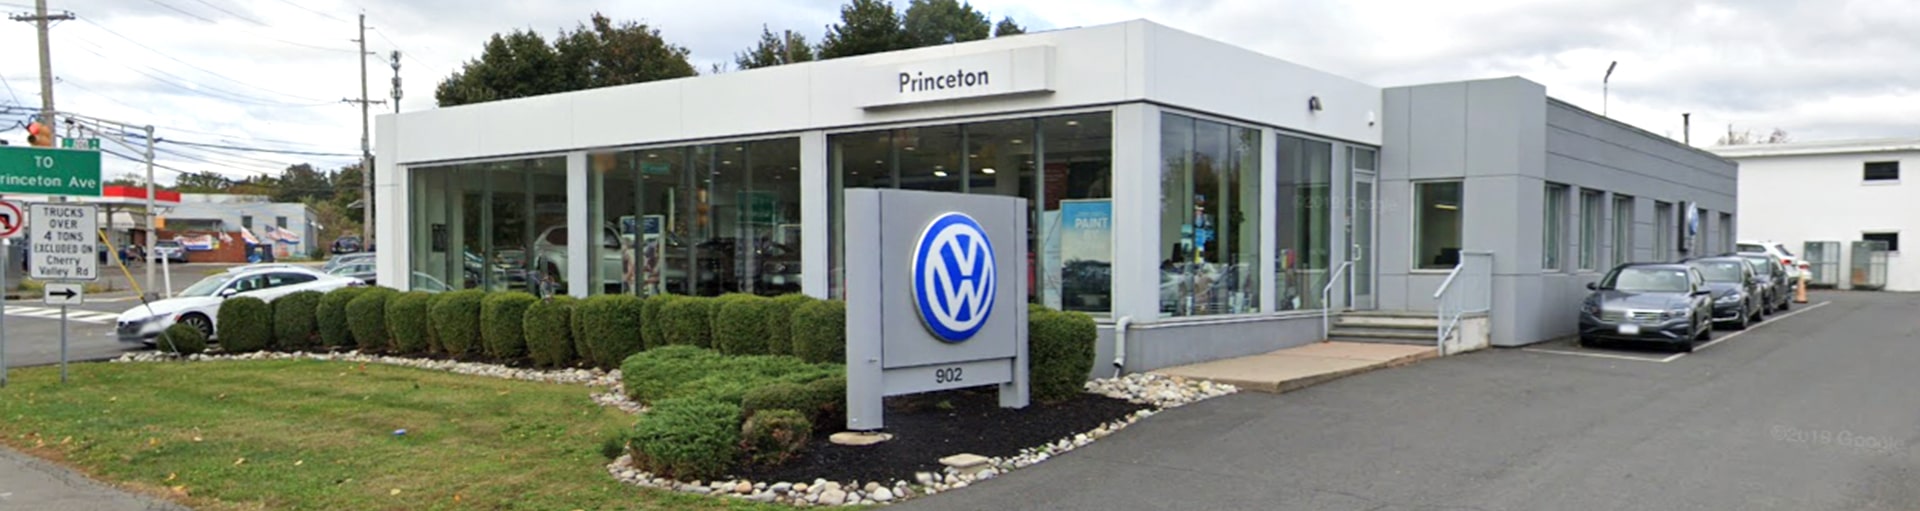 Volkswagen Princeton VW Service Near Lawrenceville, NJ